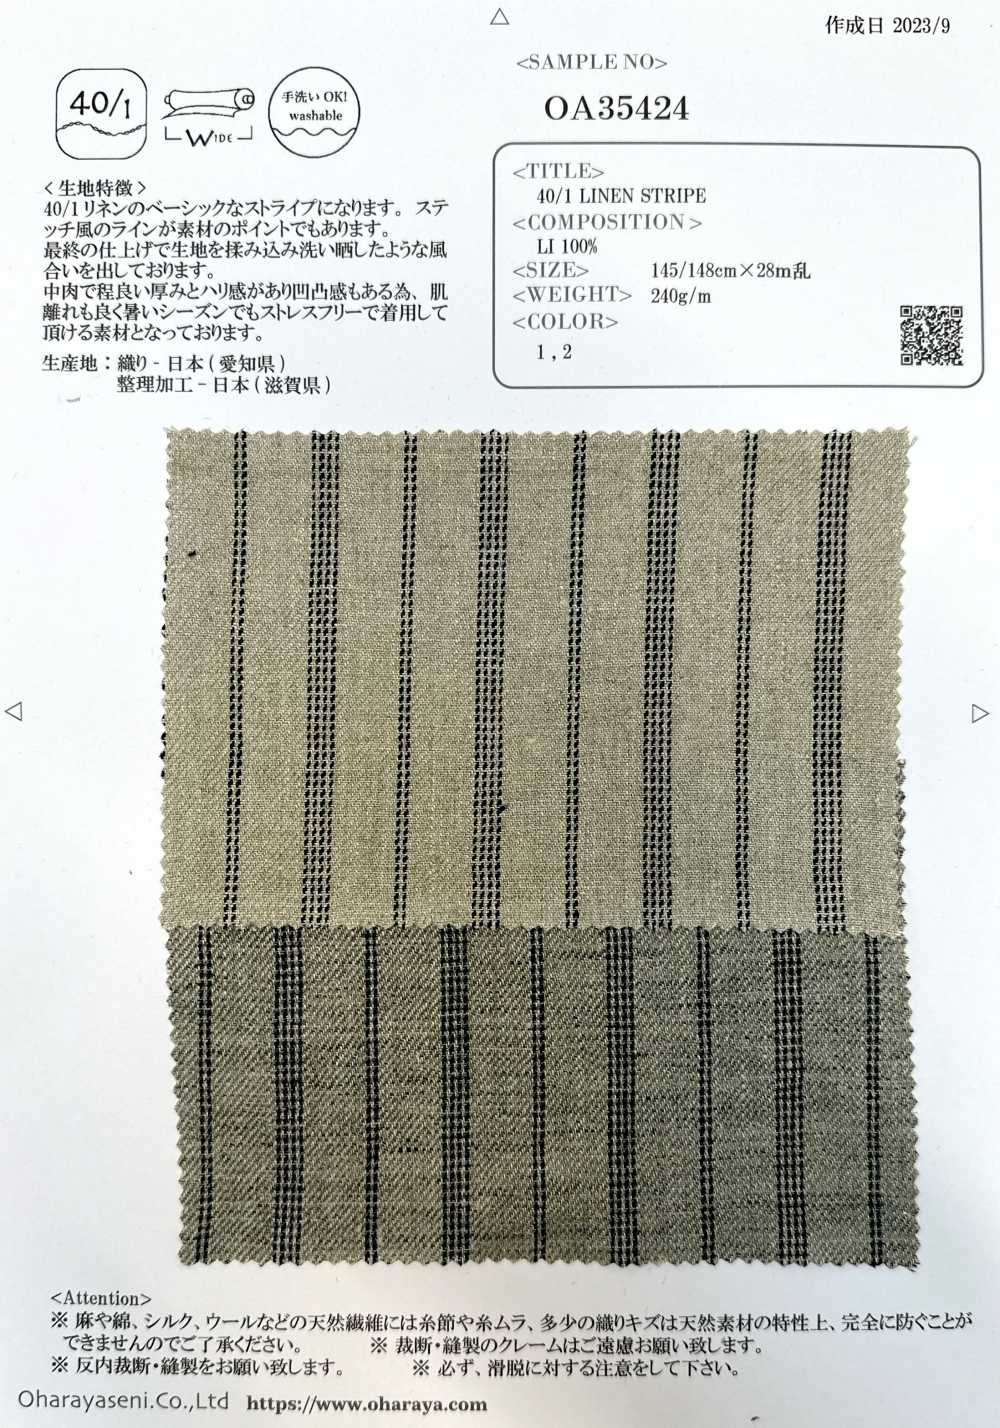 OA35424 40/1 RAYA LINO[Fabrica Textil] Oharayaseni